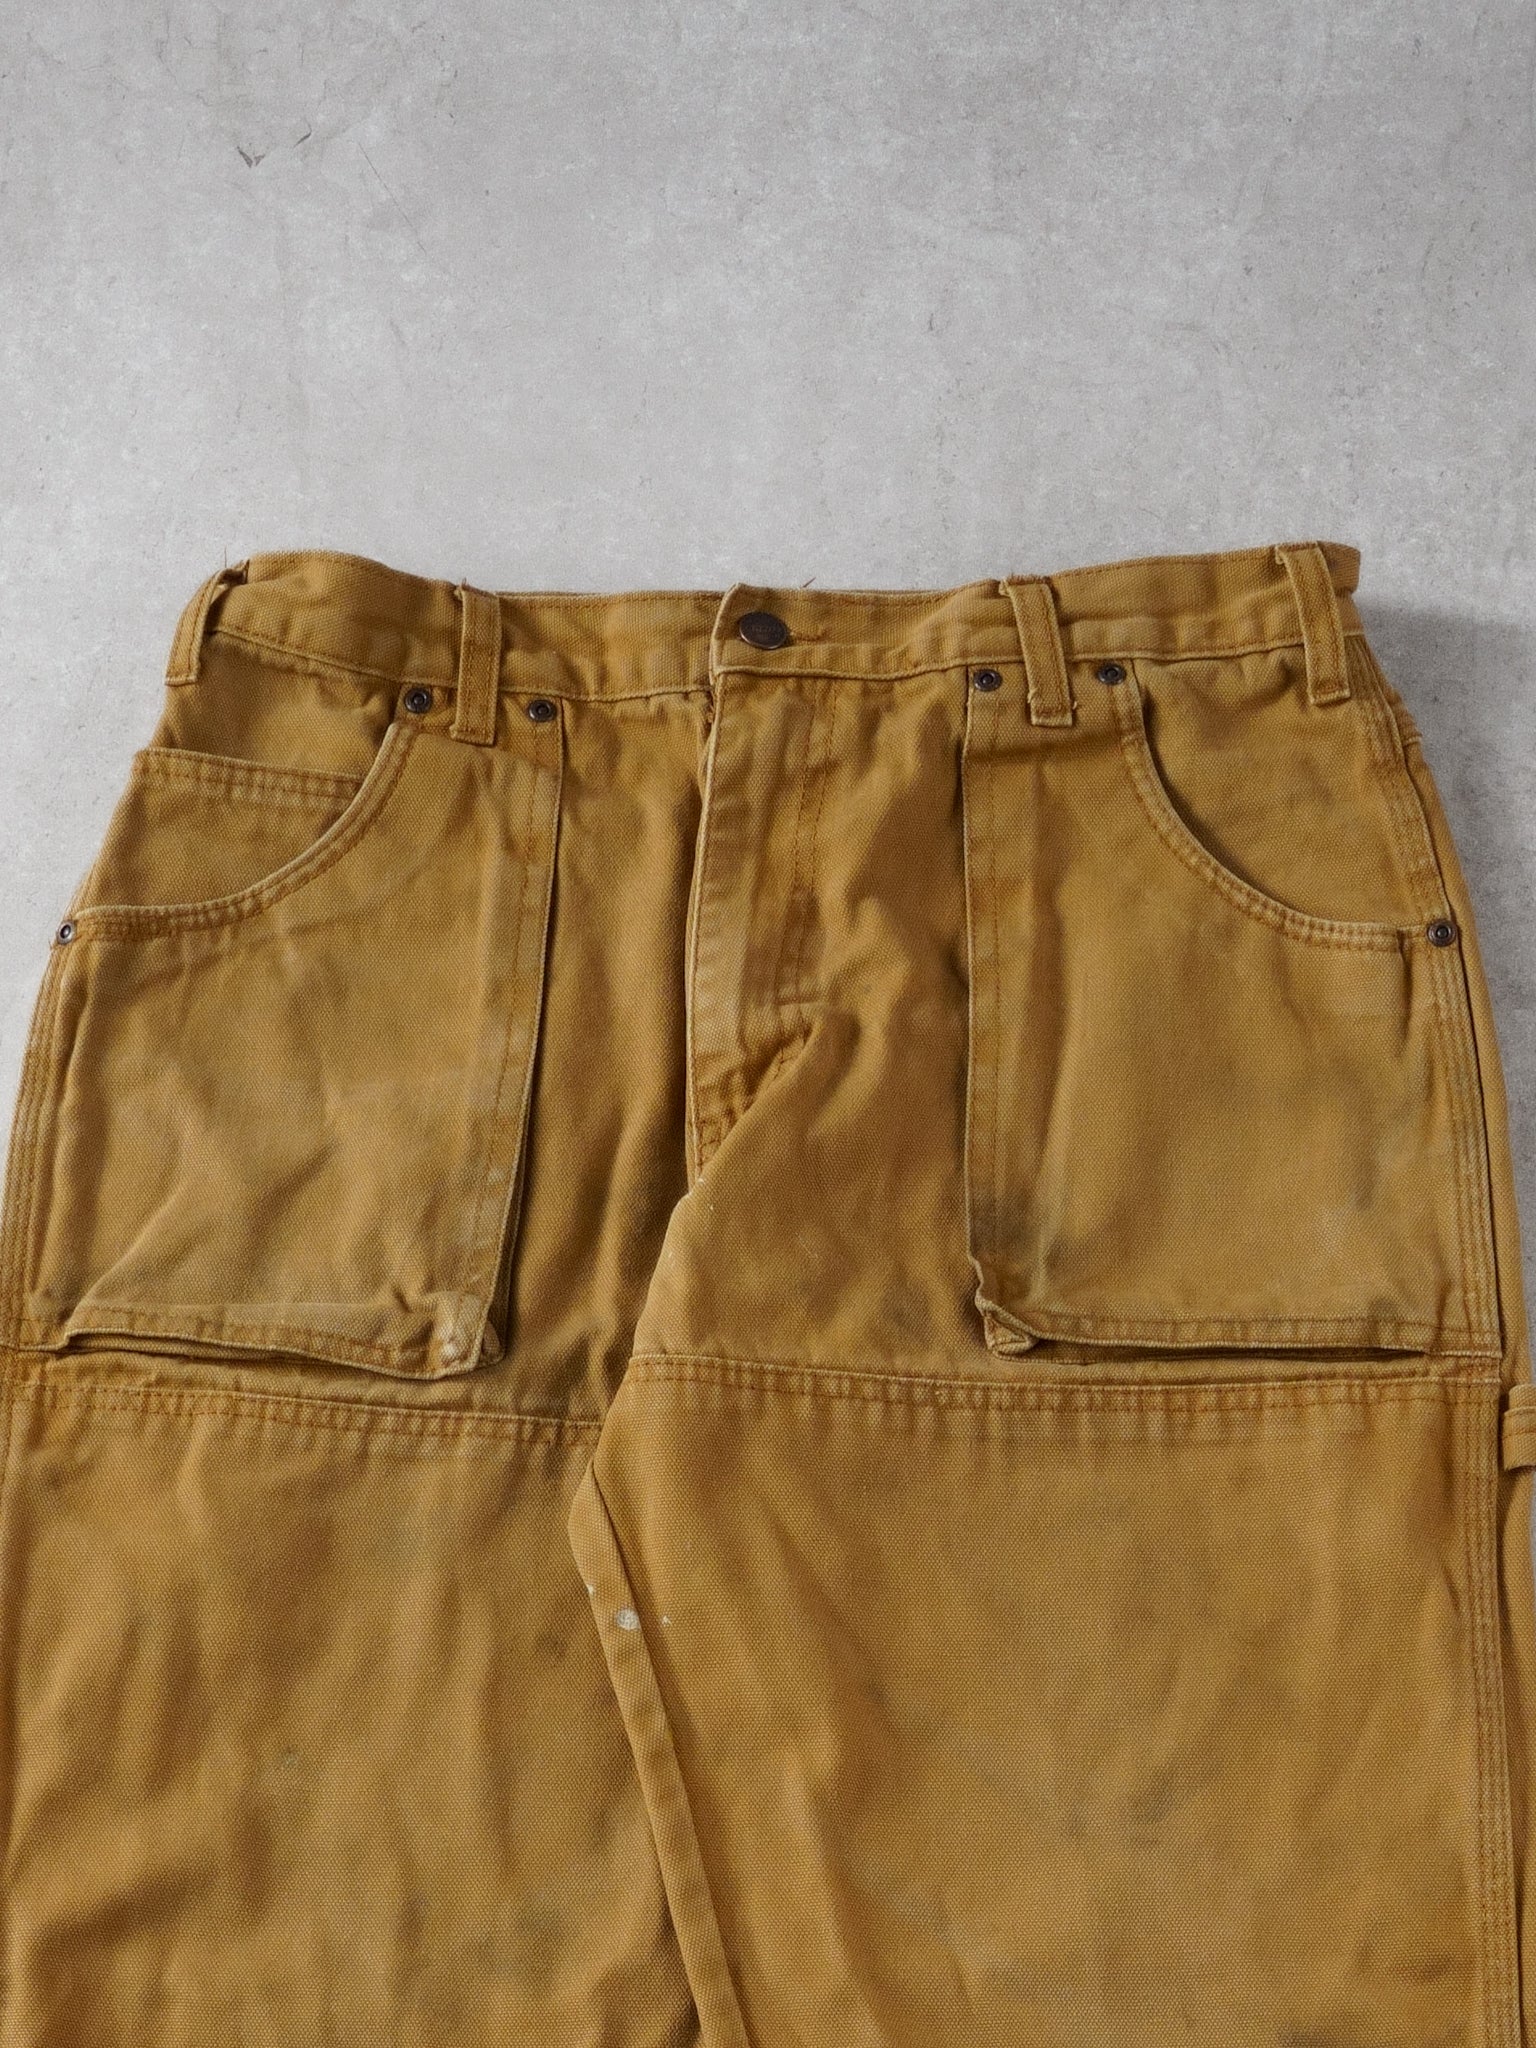 Vintage Khaki Dickies Double Knee Carpenter Pants (32x32)